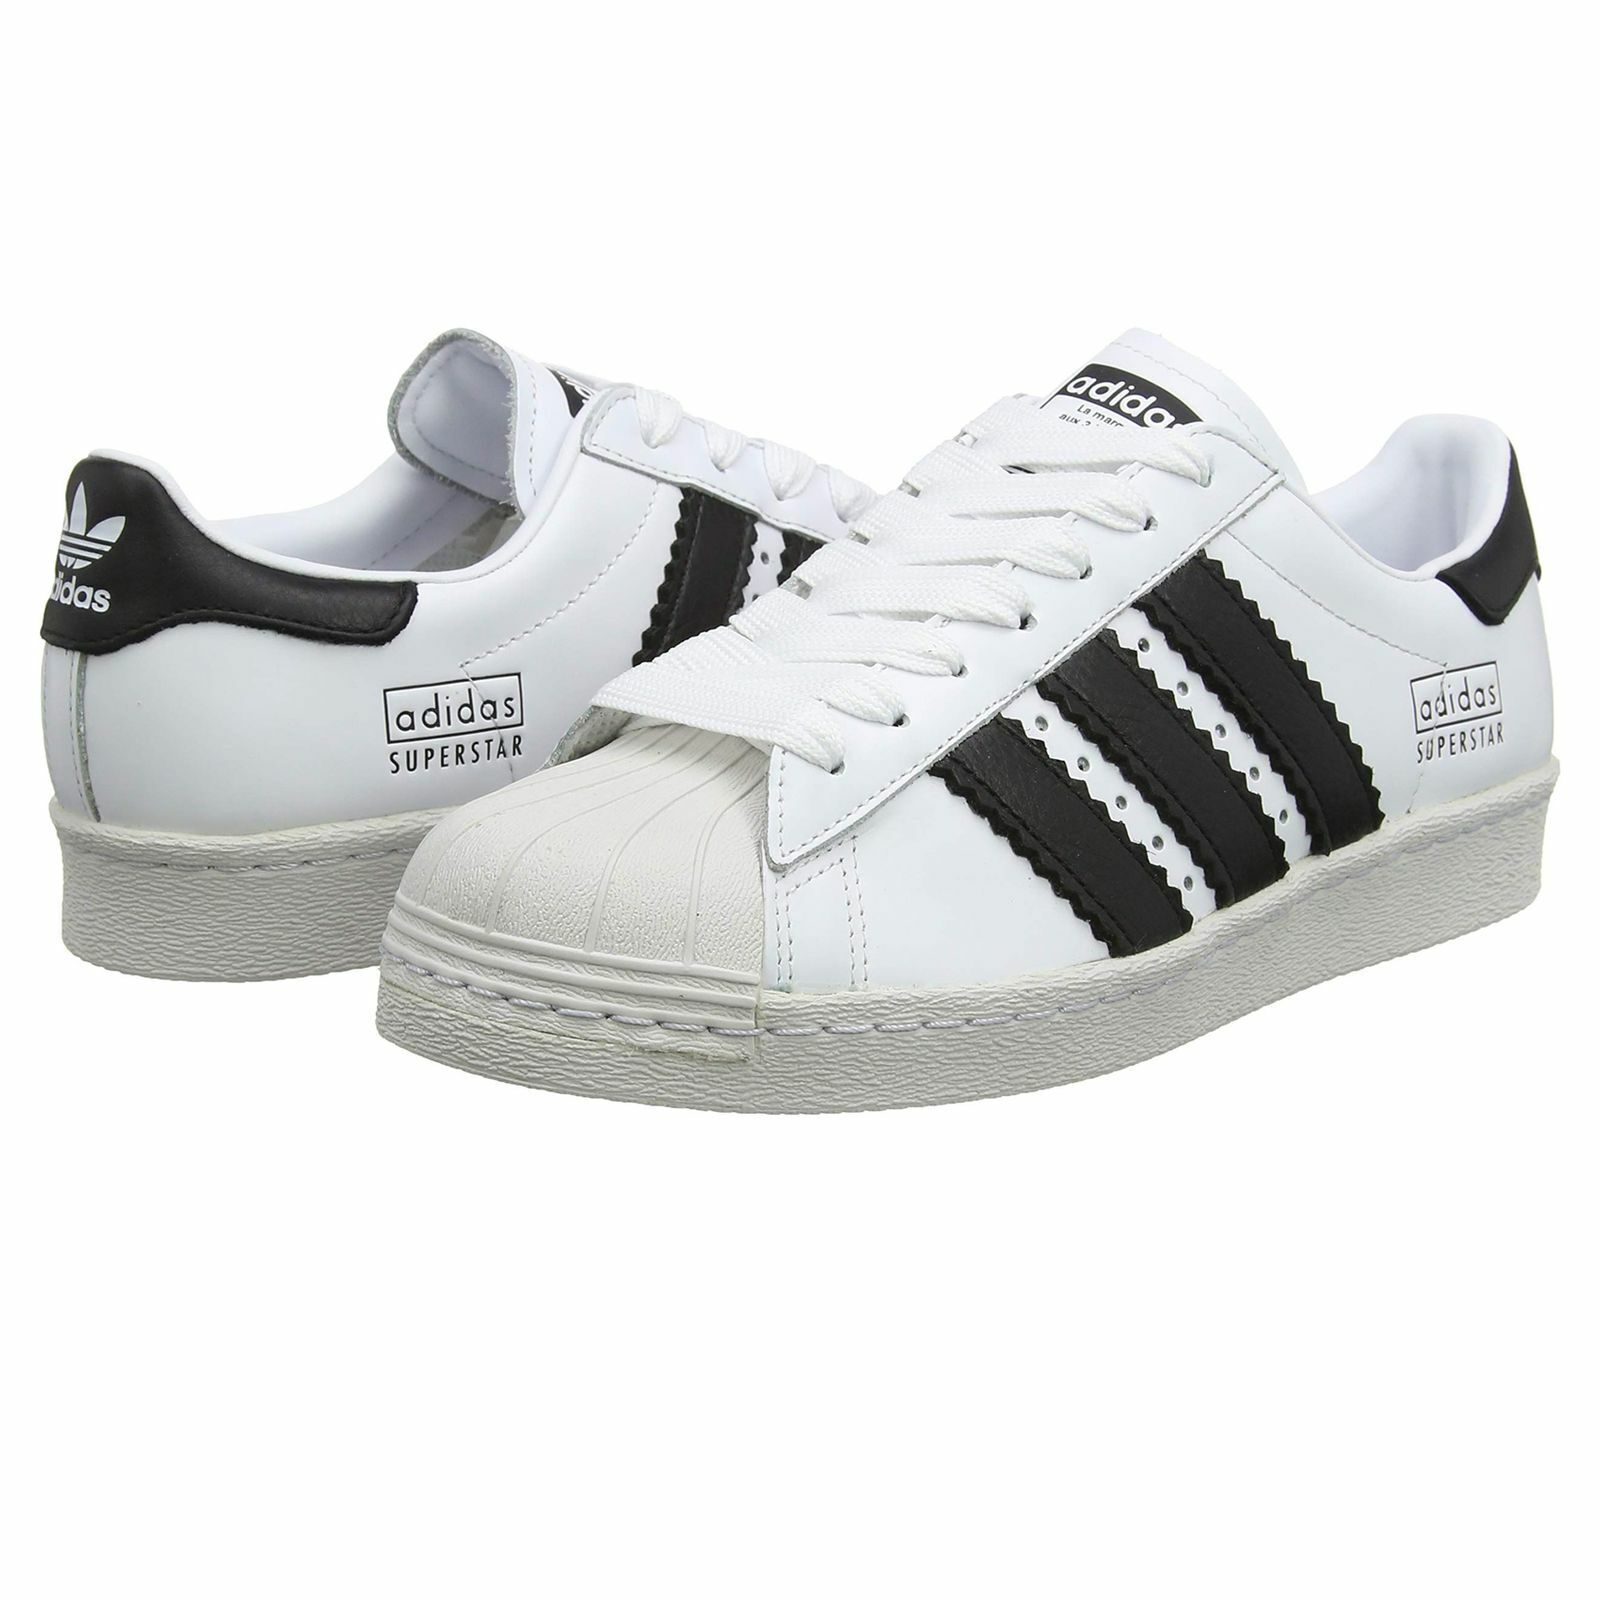 Adidas Superstar 80s Retro Sneaker Casual Trainers CG6496 